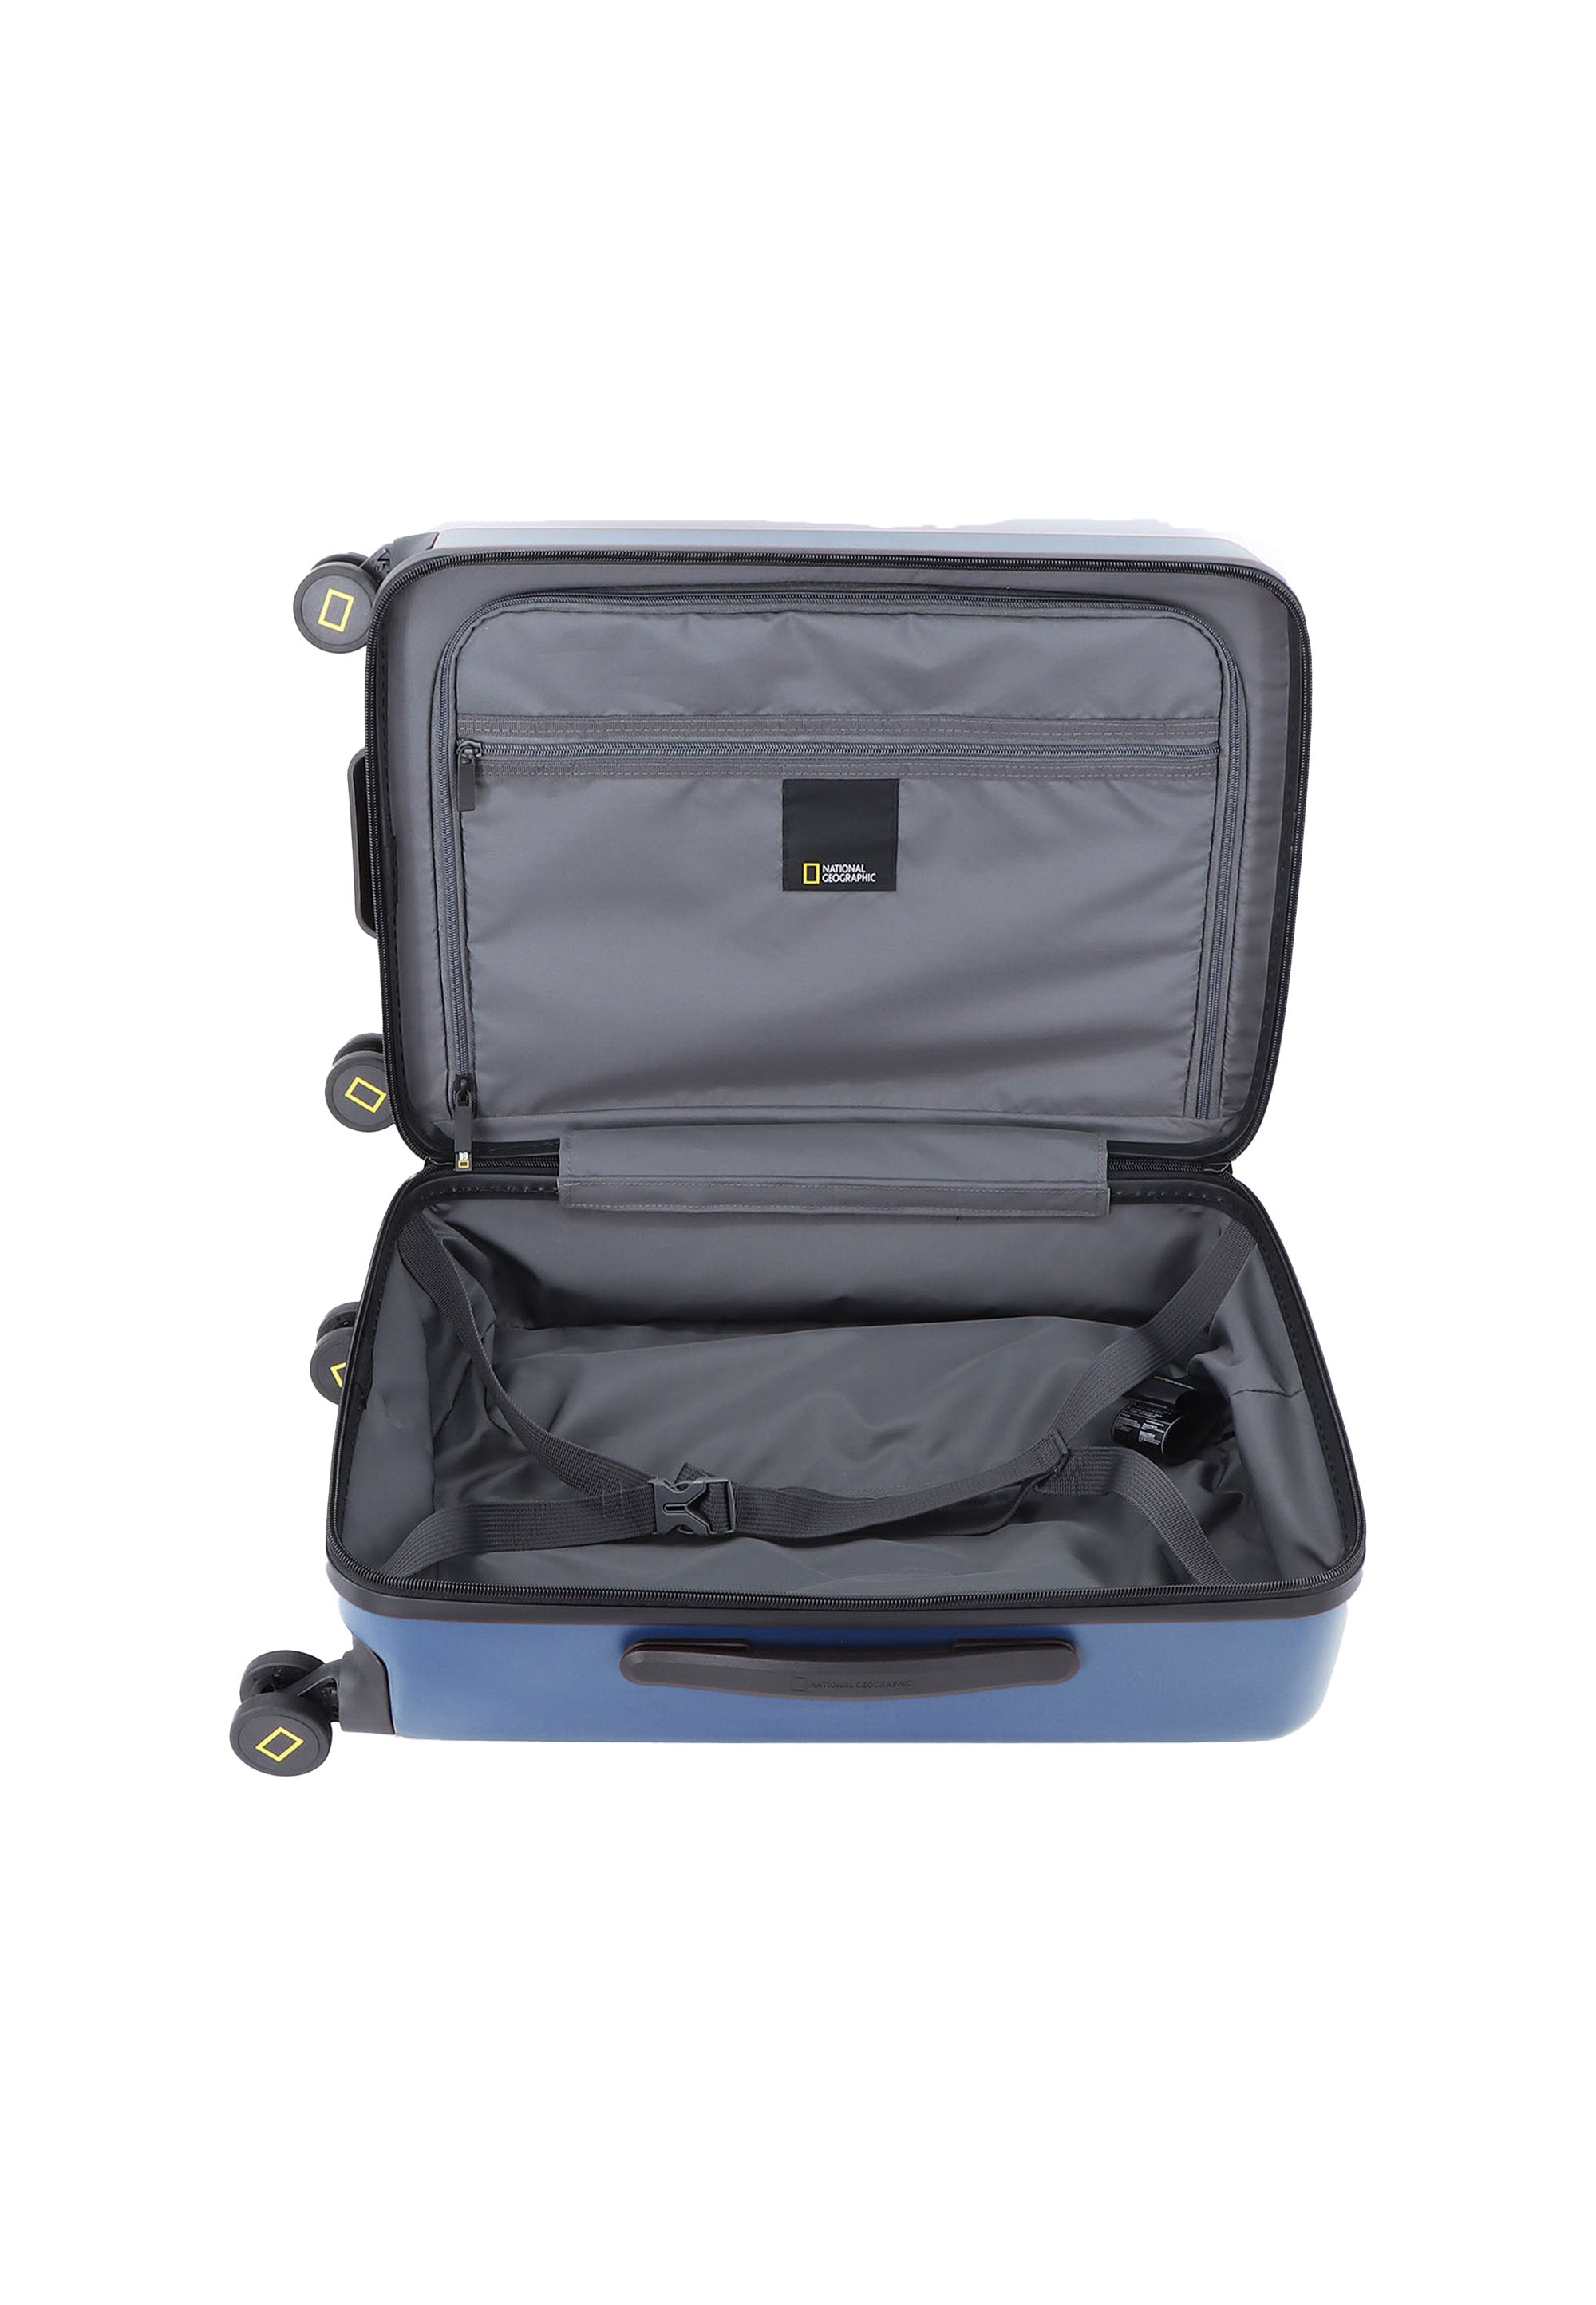 National Geographic | Handgepäck Koffer | Lodge | Blau | Gr. S